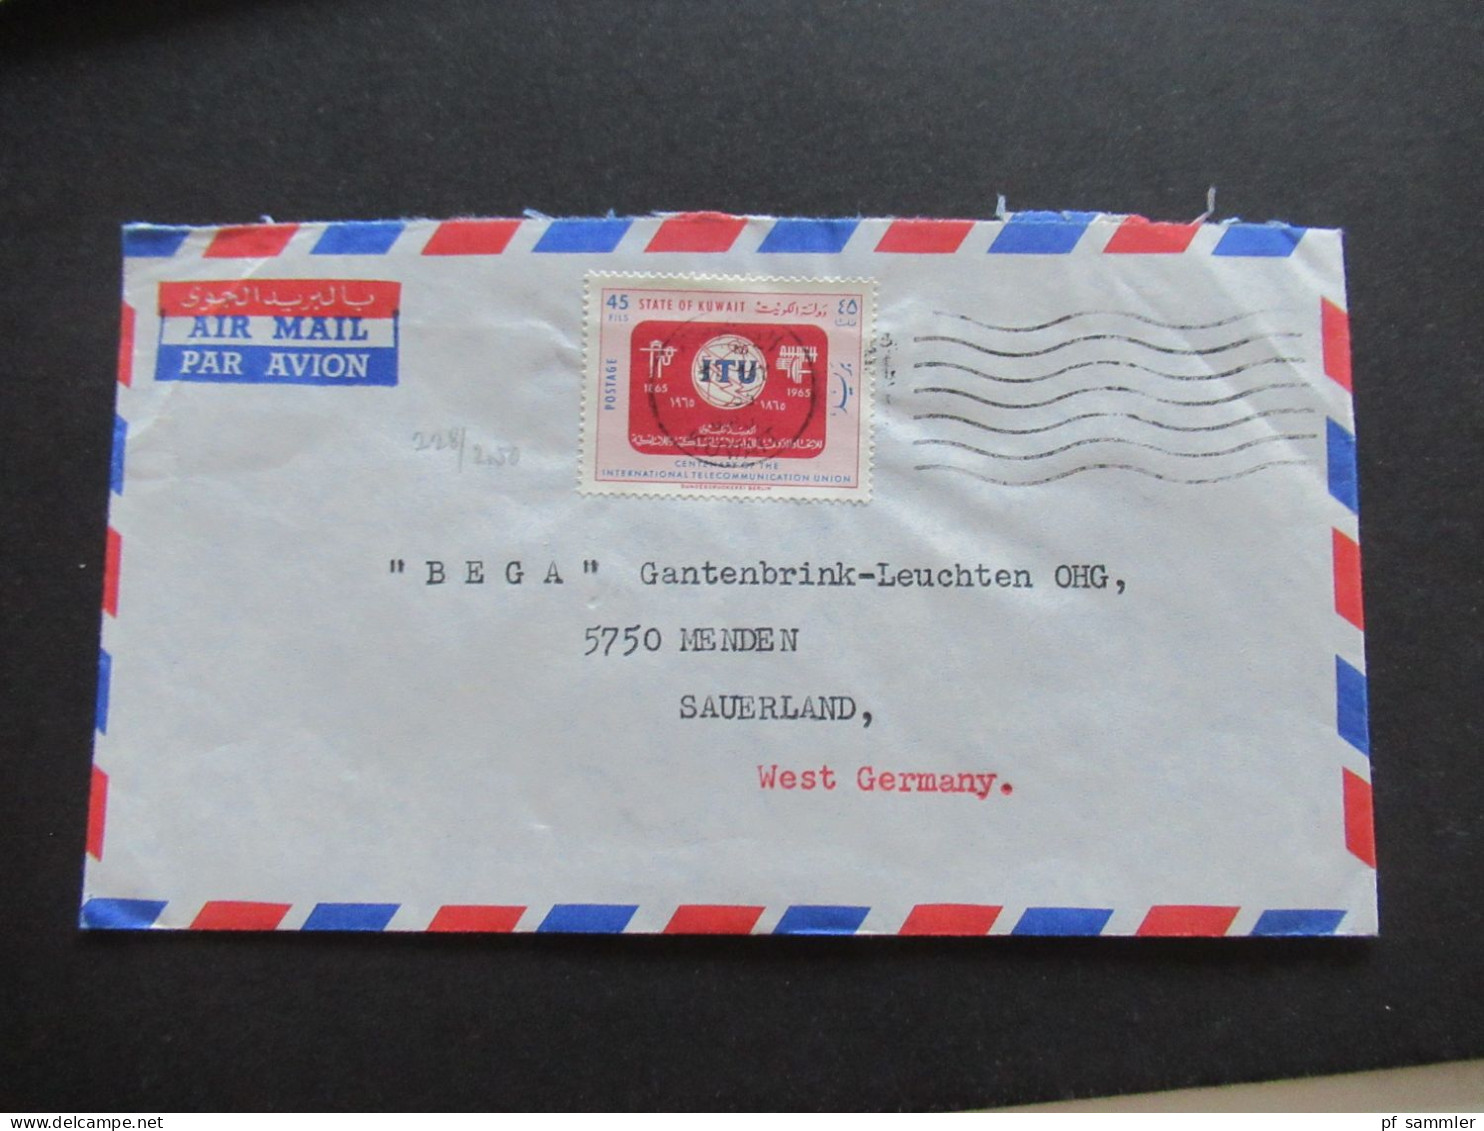 Asien Kuwait 1964 8 Belege Air Mail / Luftpost Auch Firmenumschläge Electrical Contracting Company Nafisi & Farouki - Koweït